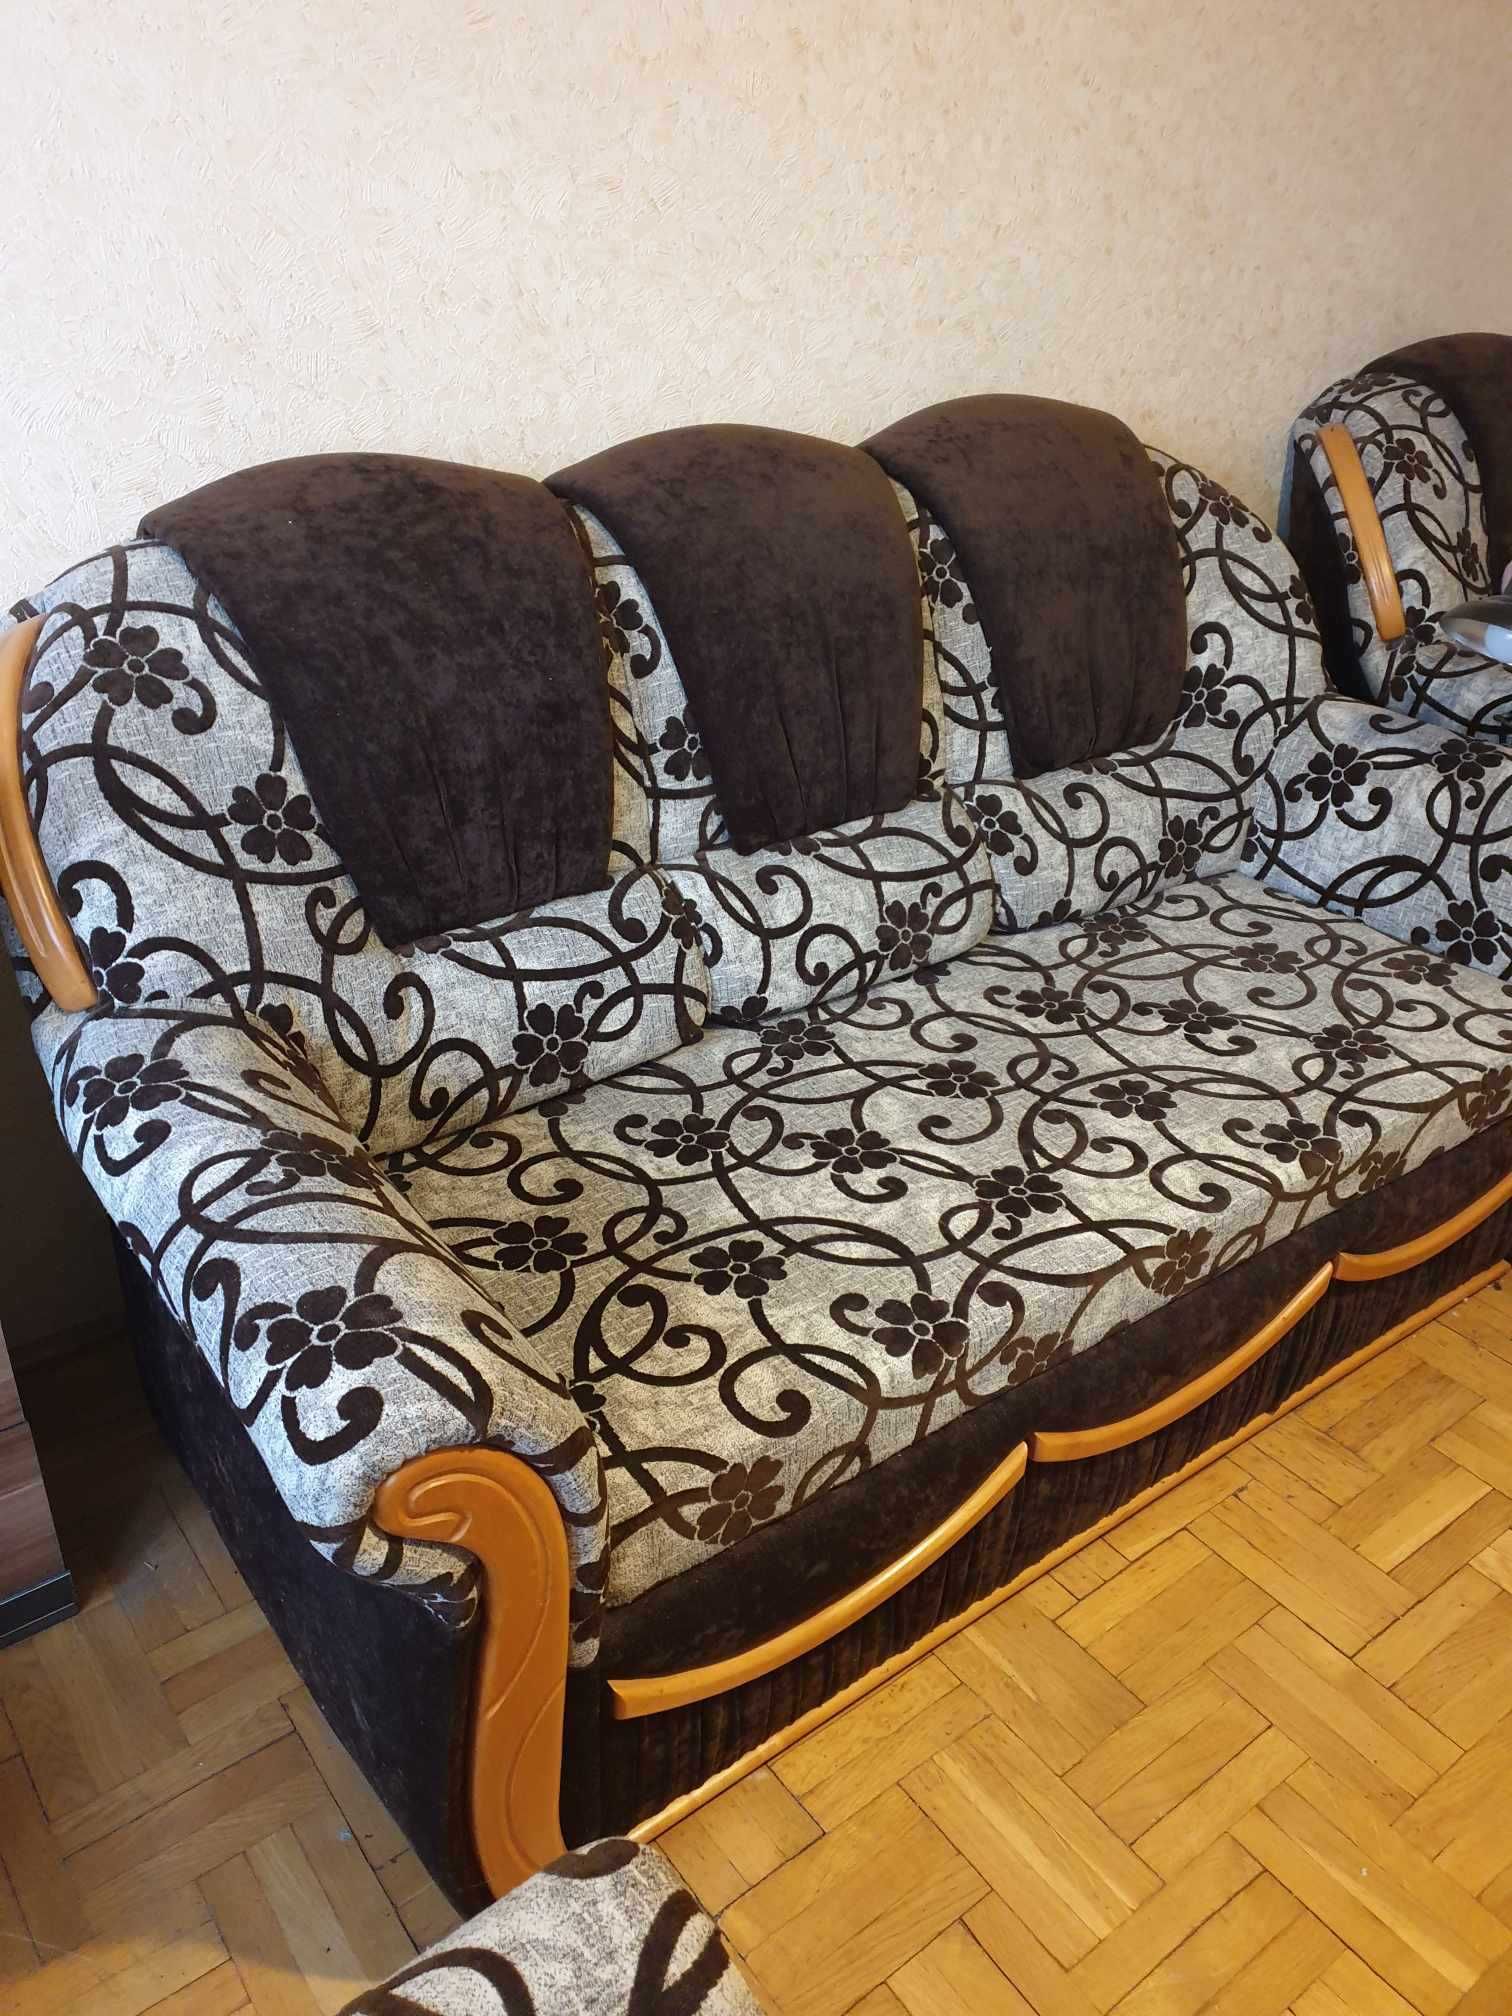 Sofa Kanapa funkcj. Spania + 2 fotele Jak Nowe Leszno TRANSPORT Gratis